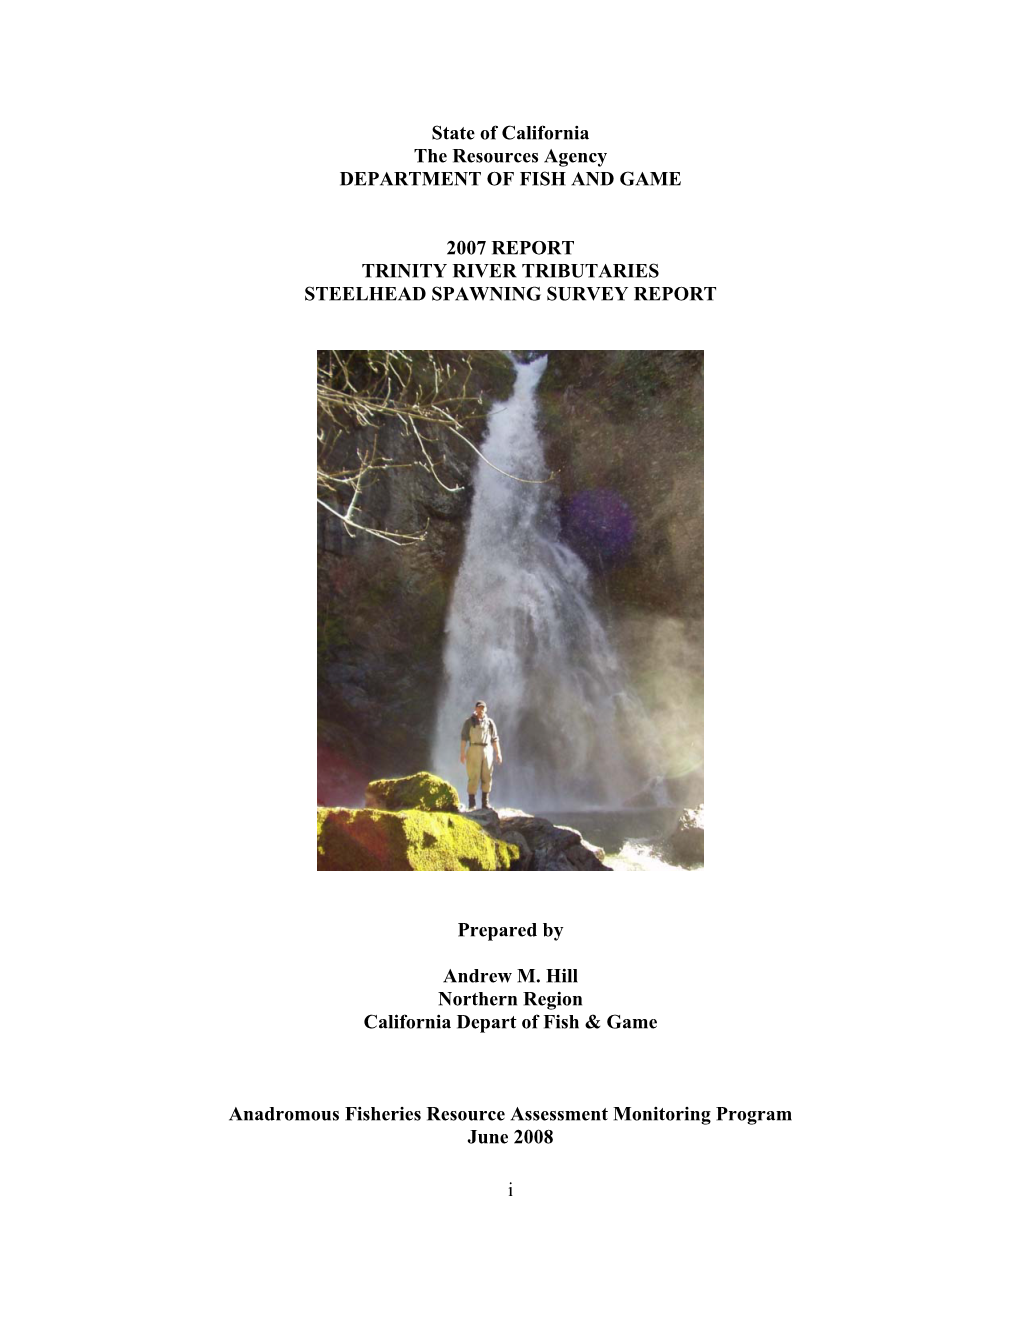 2007 Trinity River Tributaries Steelhead Spawning Survey Report